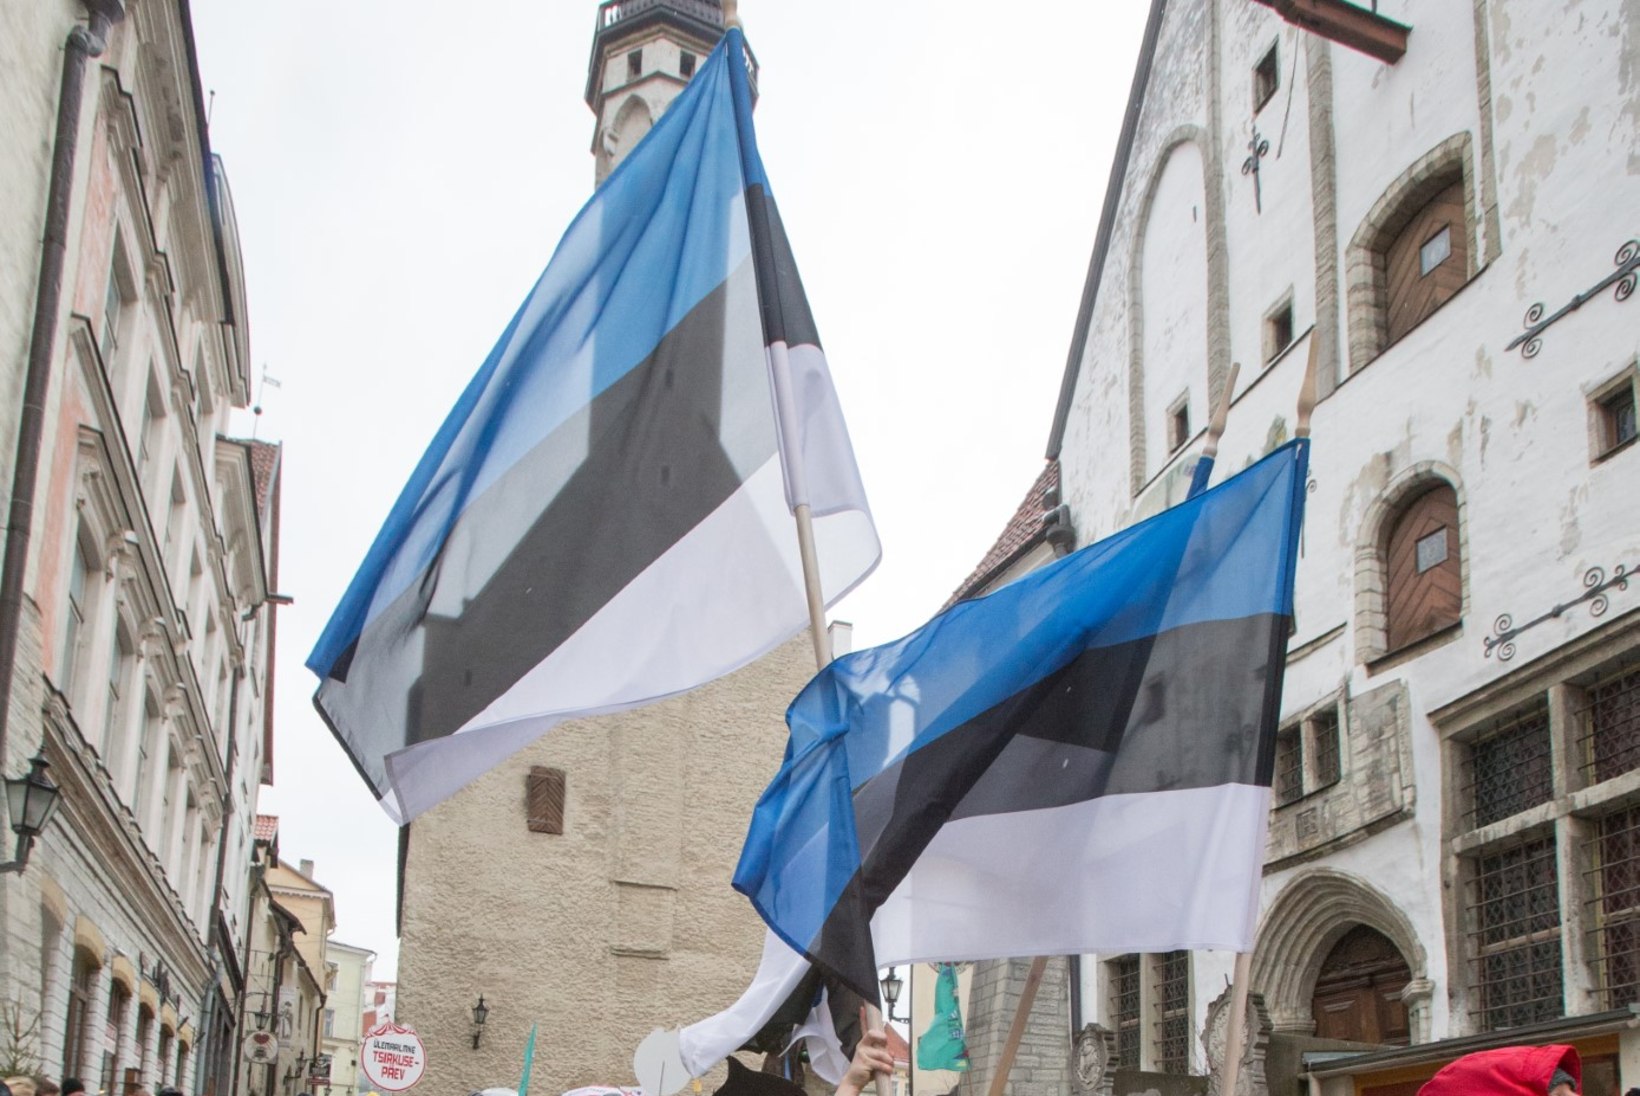 GALERII: tsirkusepäev Tallinna vanalinnas